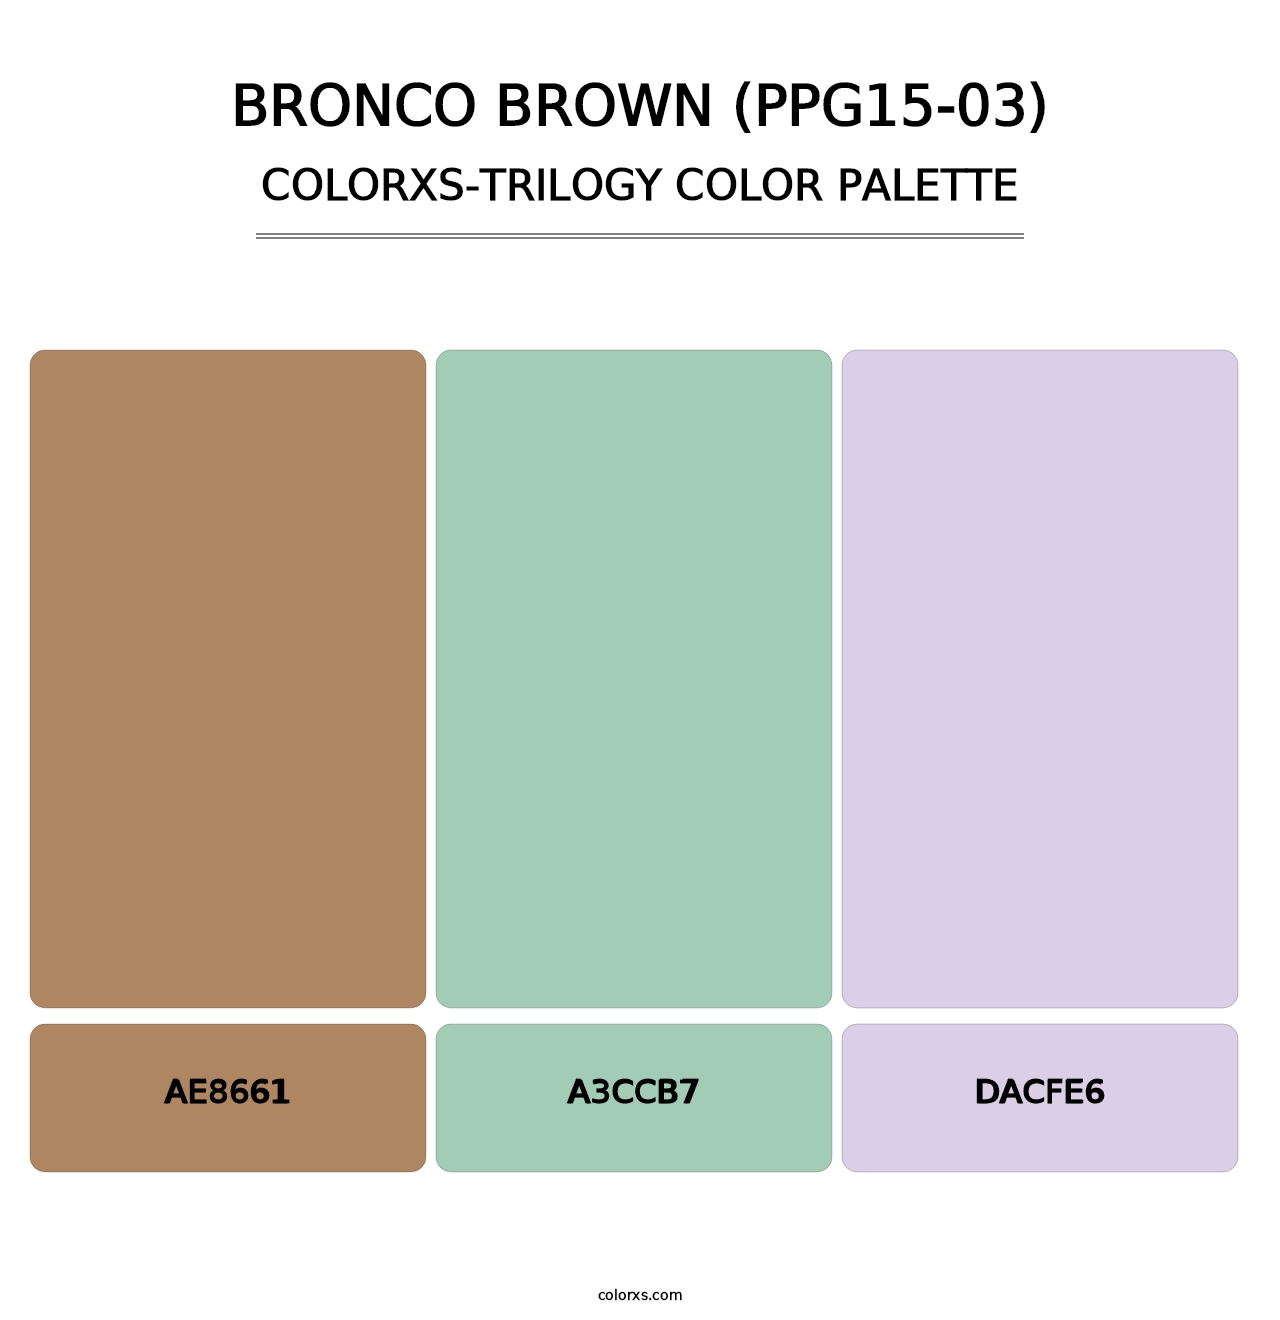 Bronco Brown (PPG15-03) - Colorxs Trilogy Palette